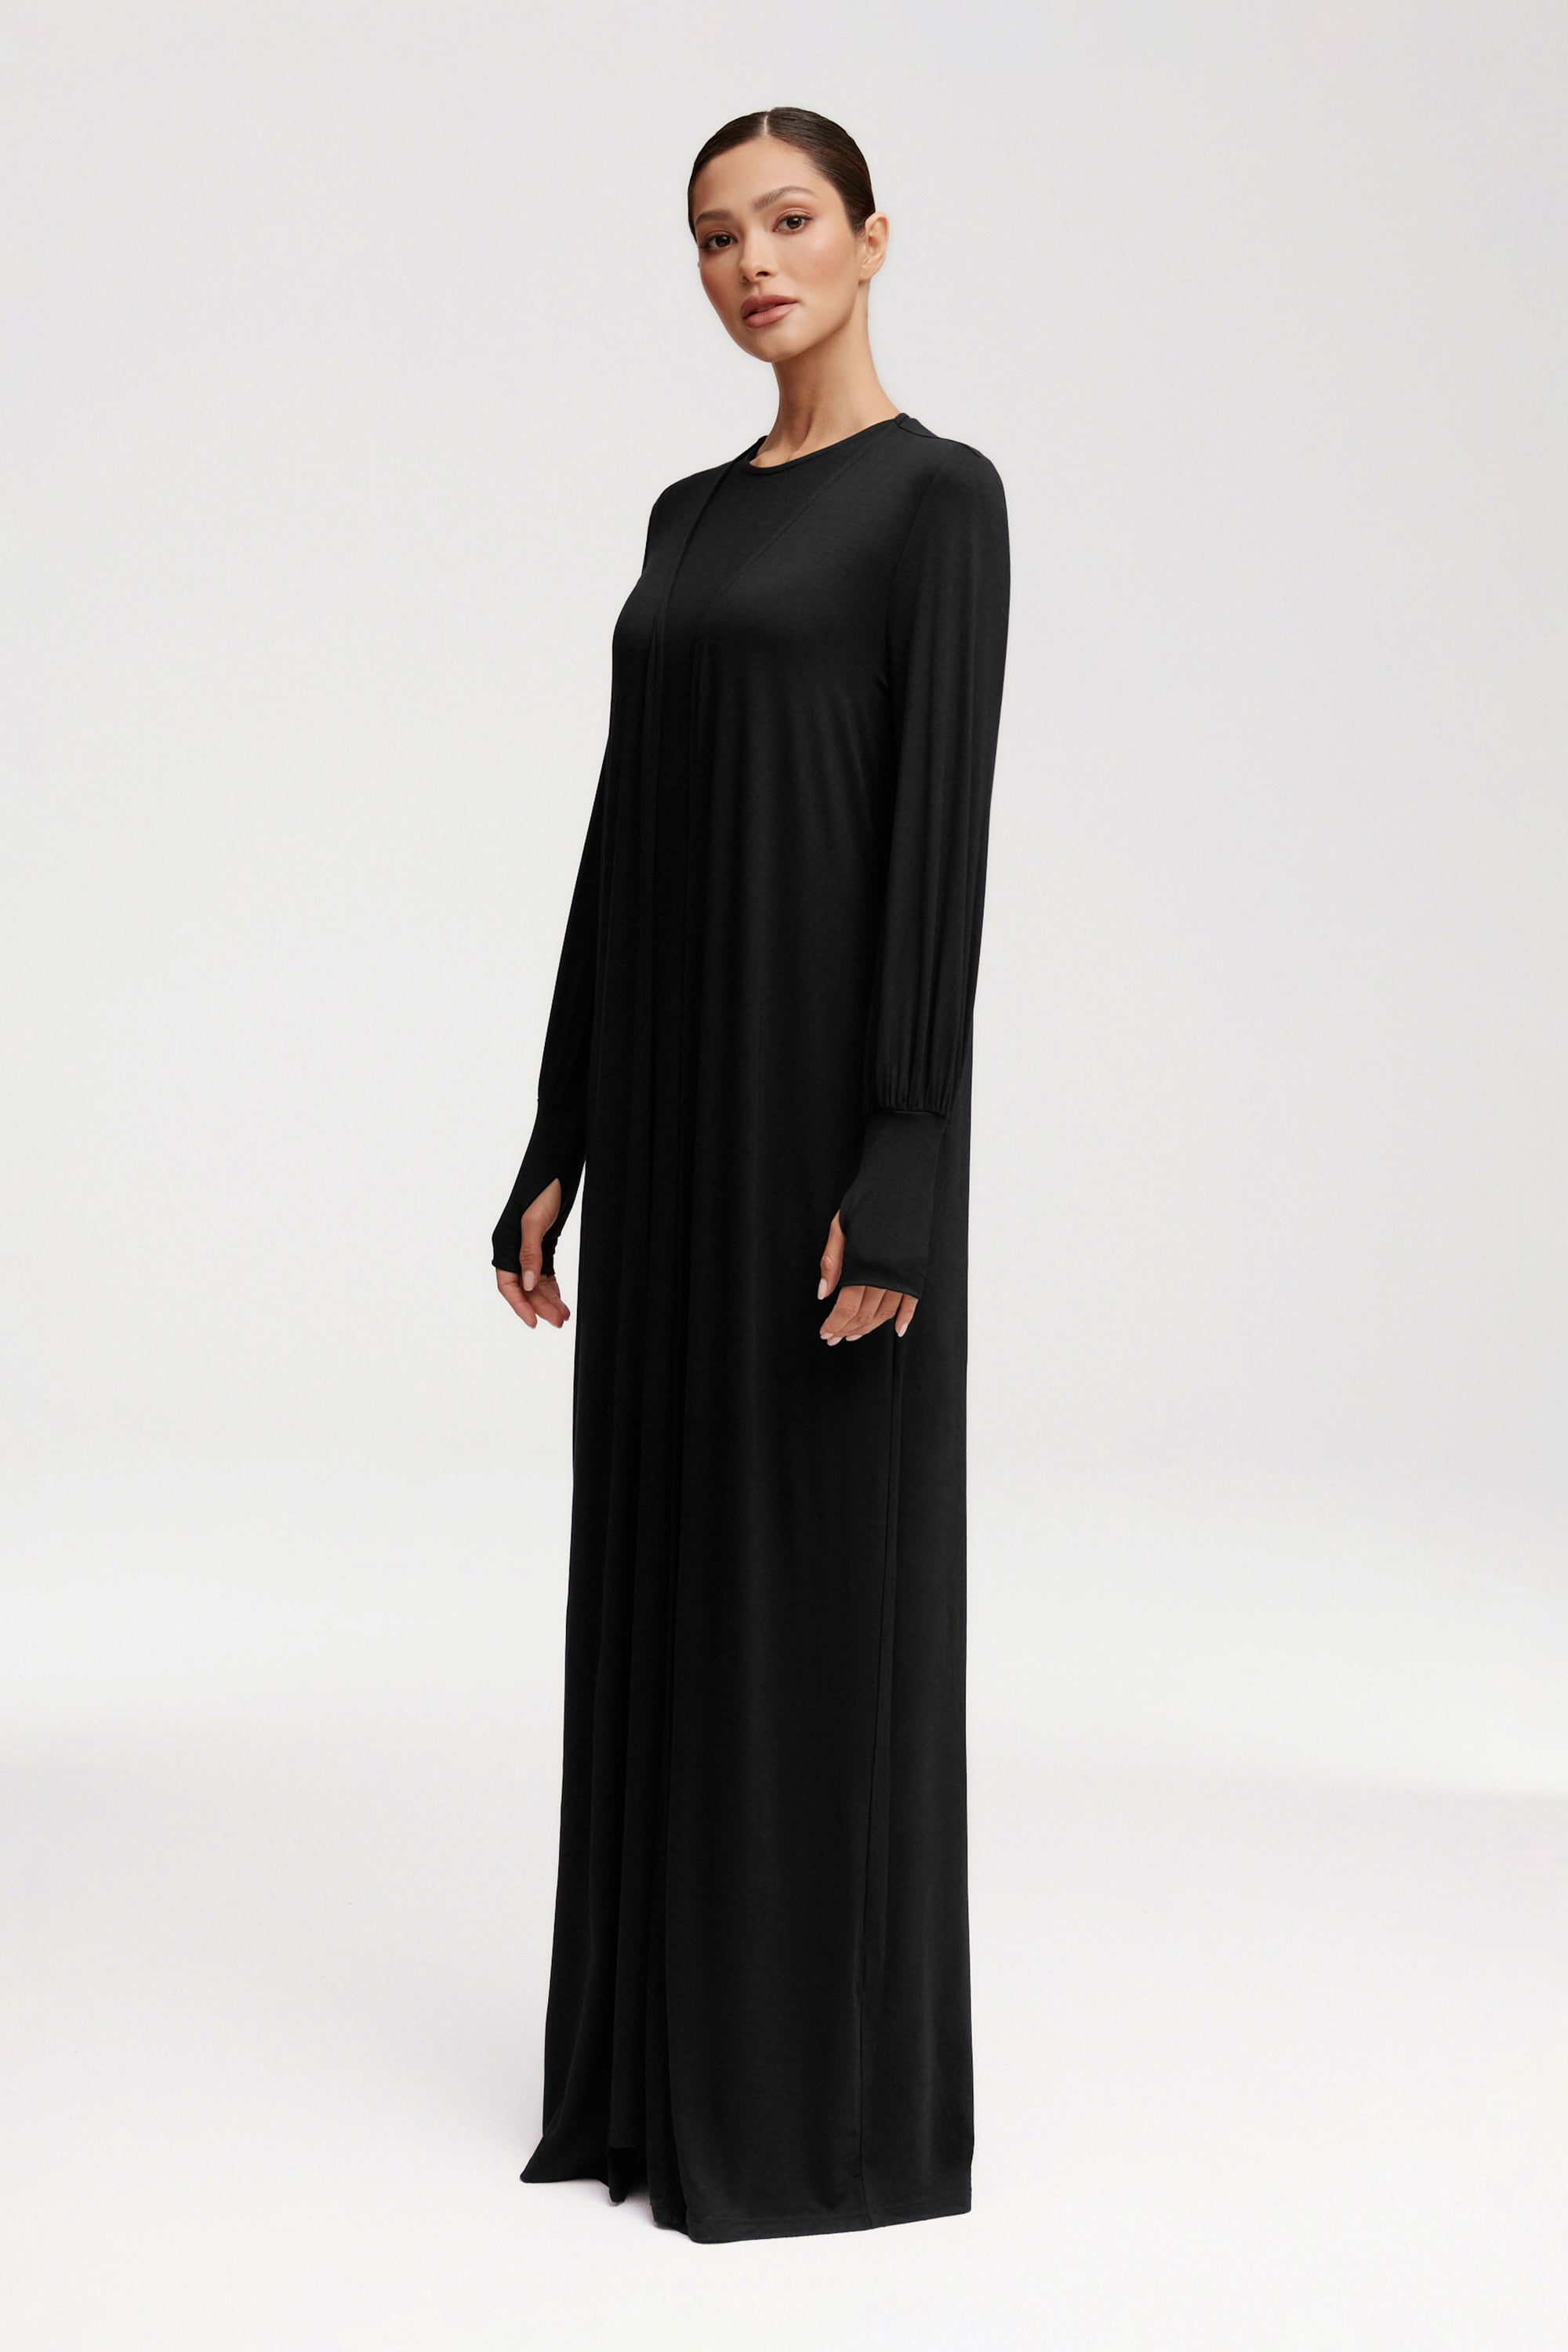 Jenin Jersey Open Abaya & Maxi Dress Set - Black Clothing Veiled 